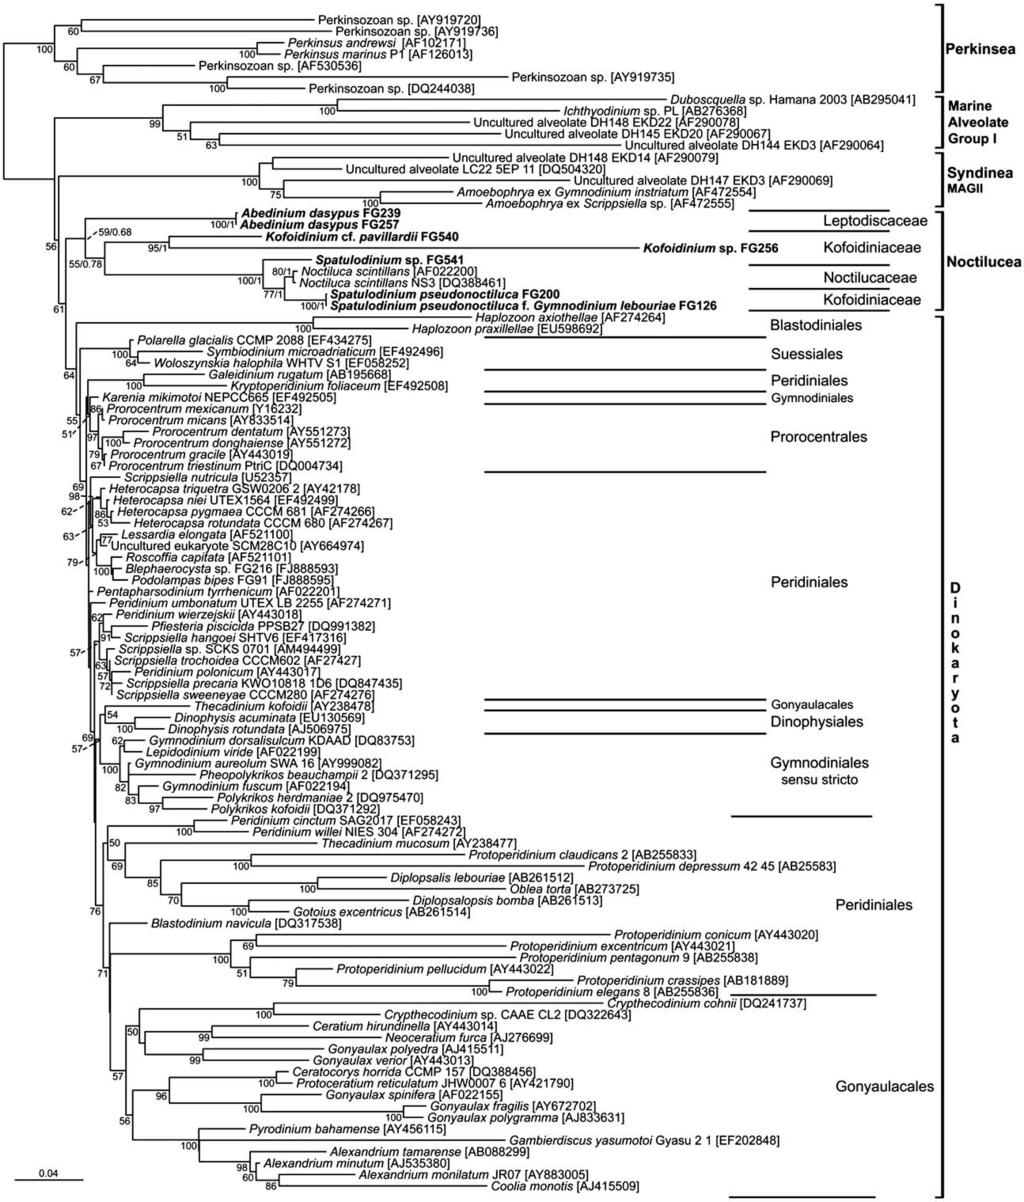 Molecular Phylogeny of Noctilucoid Dinoflagellates 7 Figure 3. Maximum likelihood phylogenetic tree of alveolate SSU rdna sequences, based on 1,194 aligned positions.